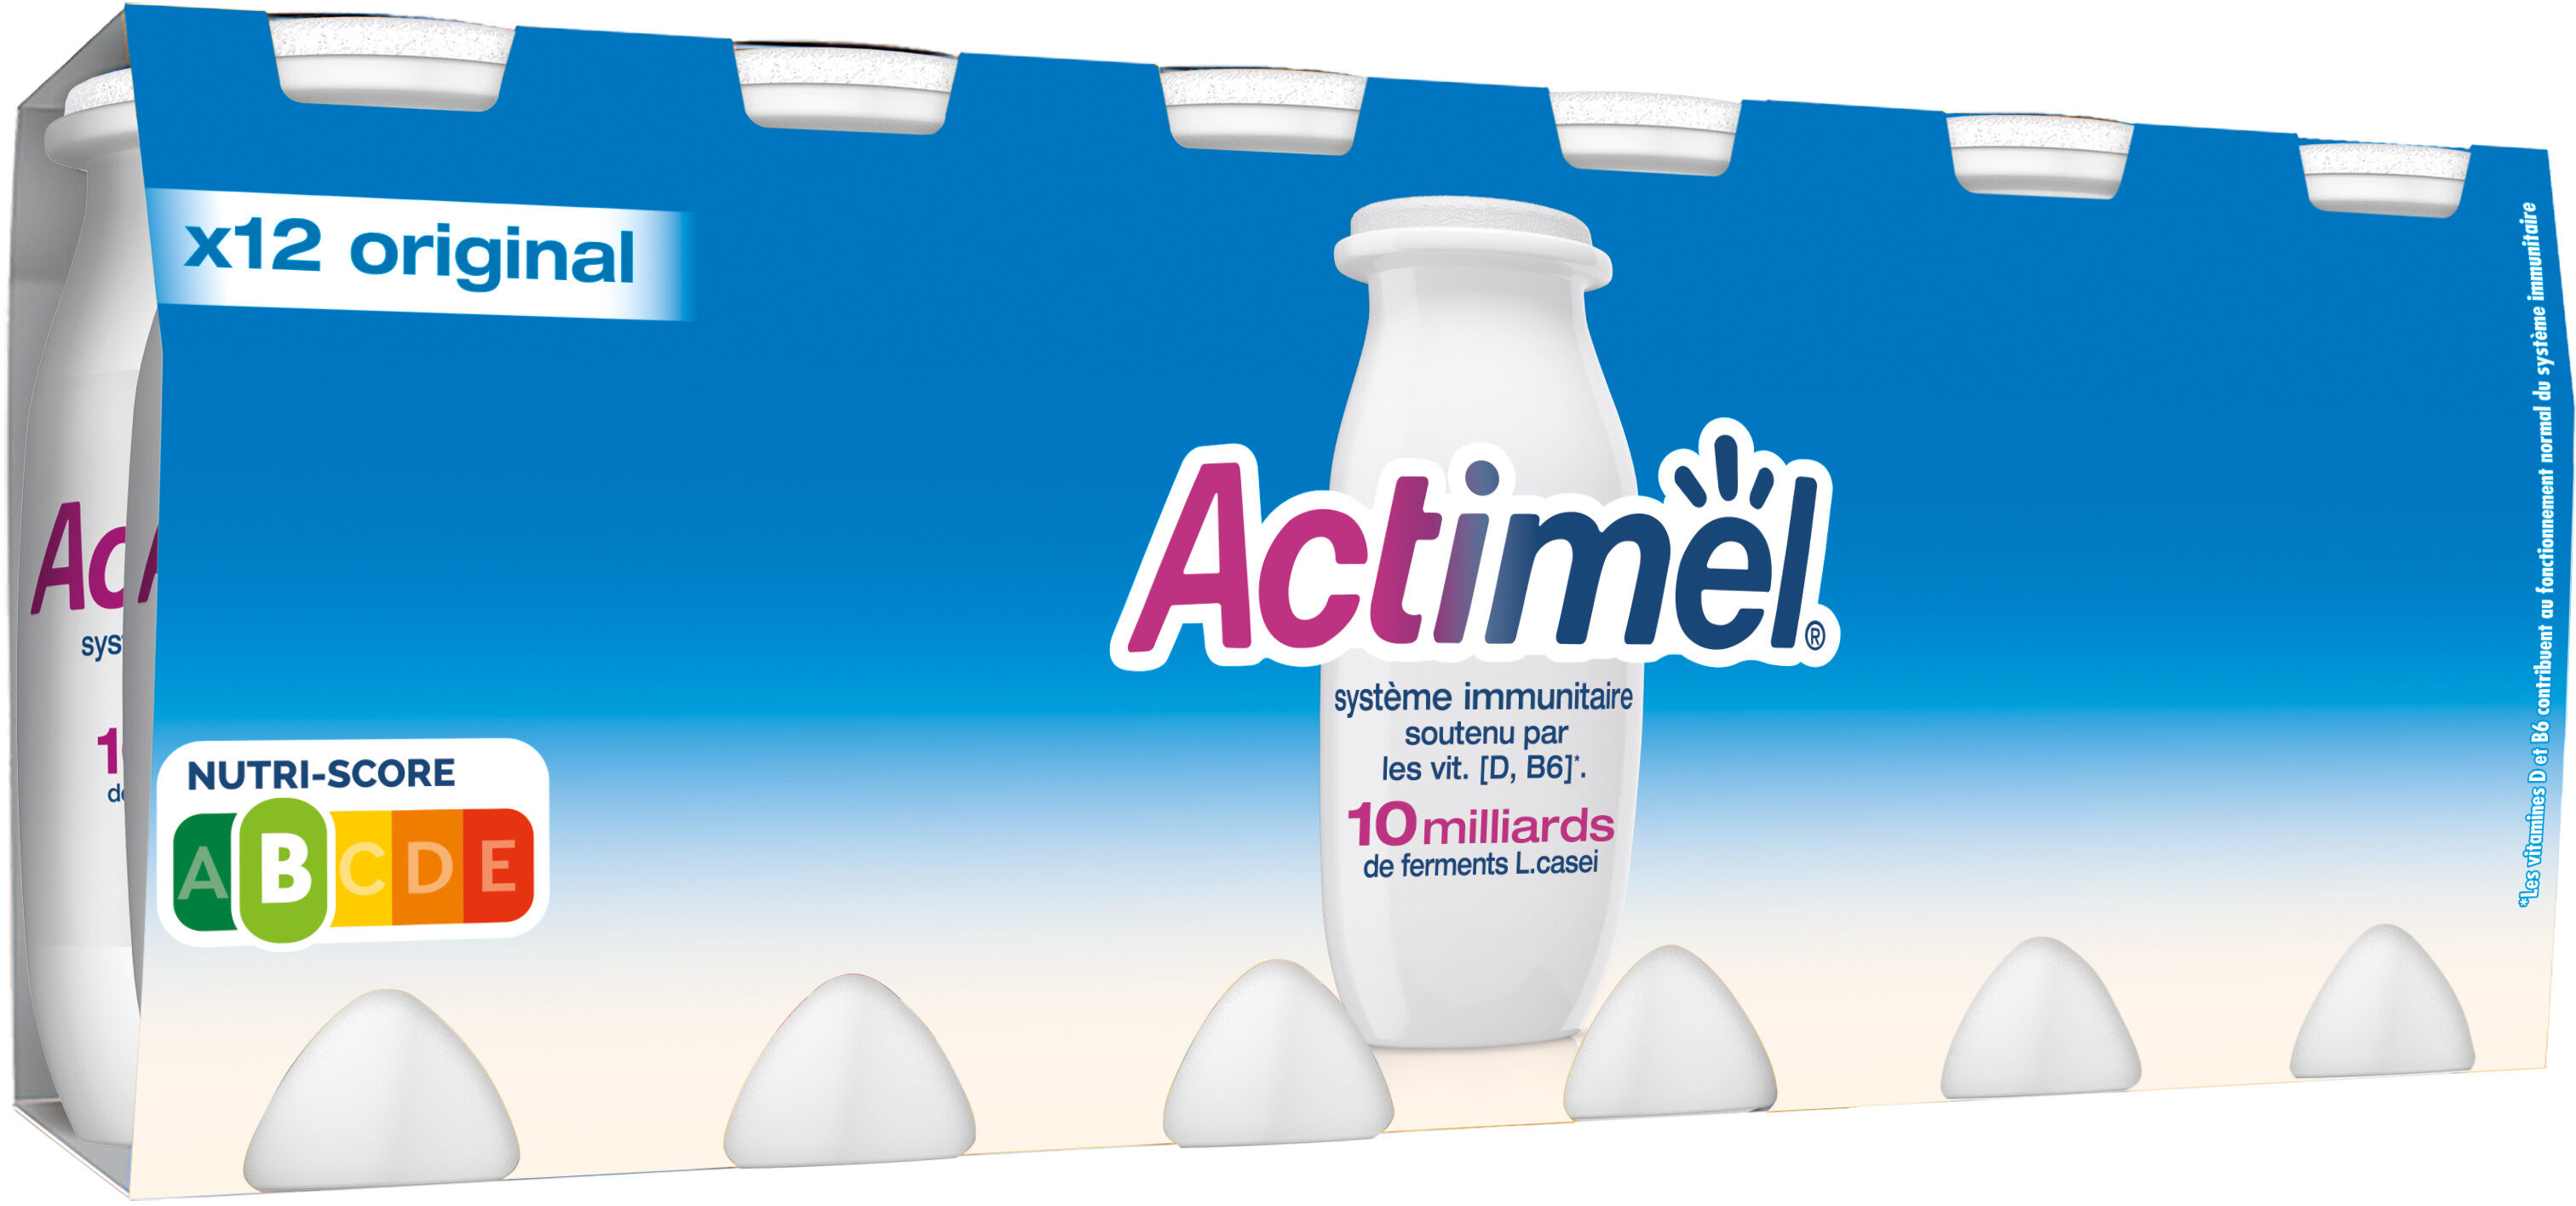 Actimel 100 g x 12 original - Produkt - fr